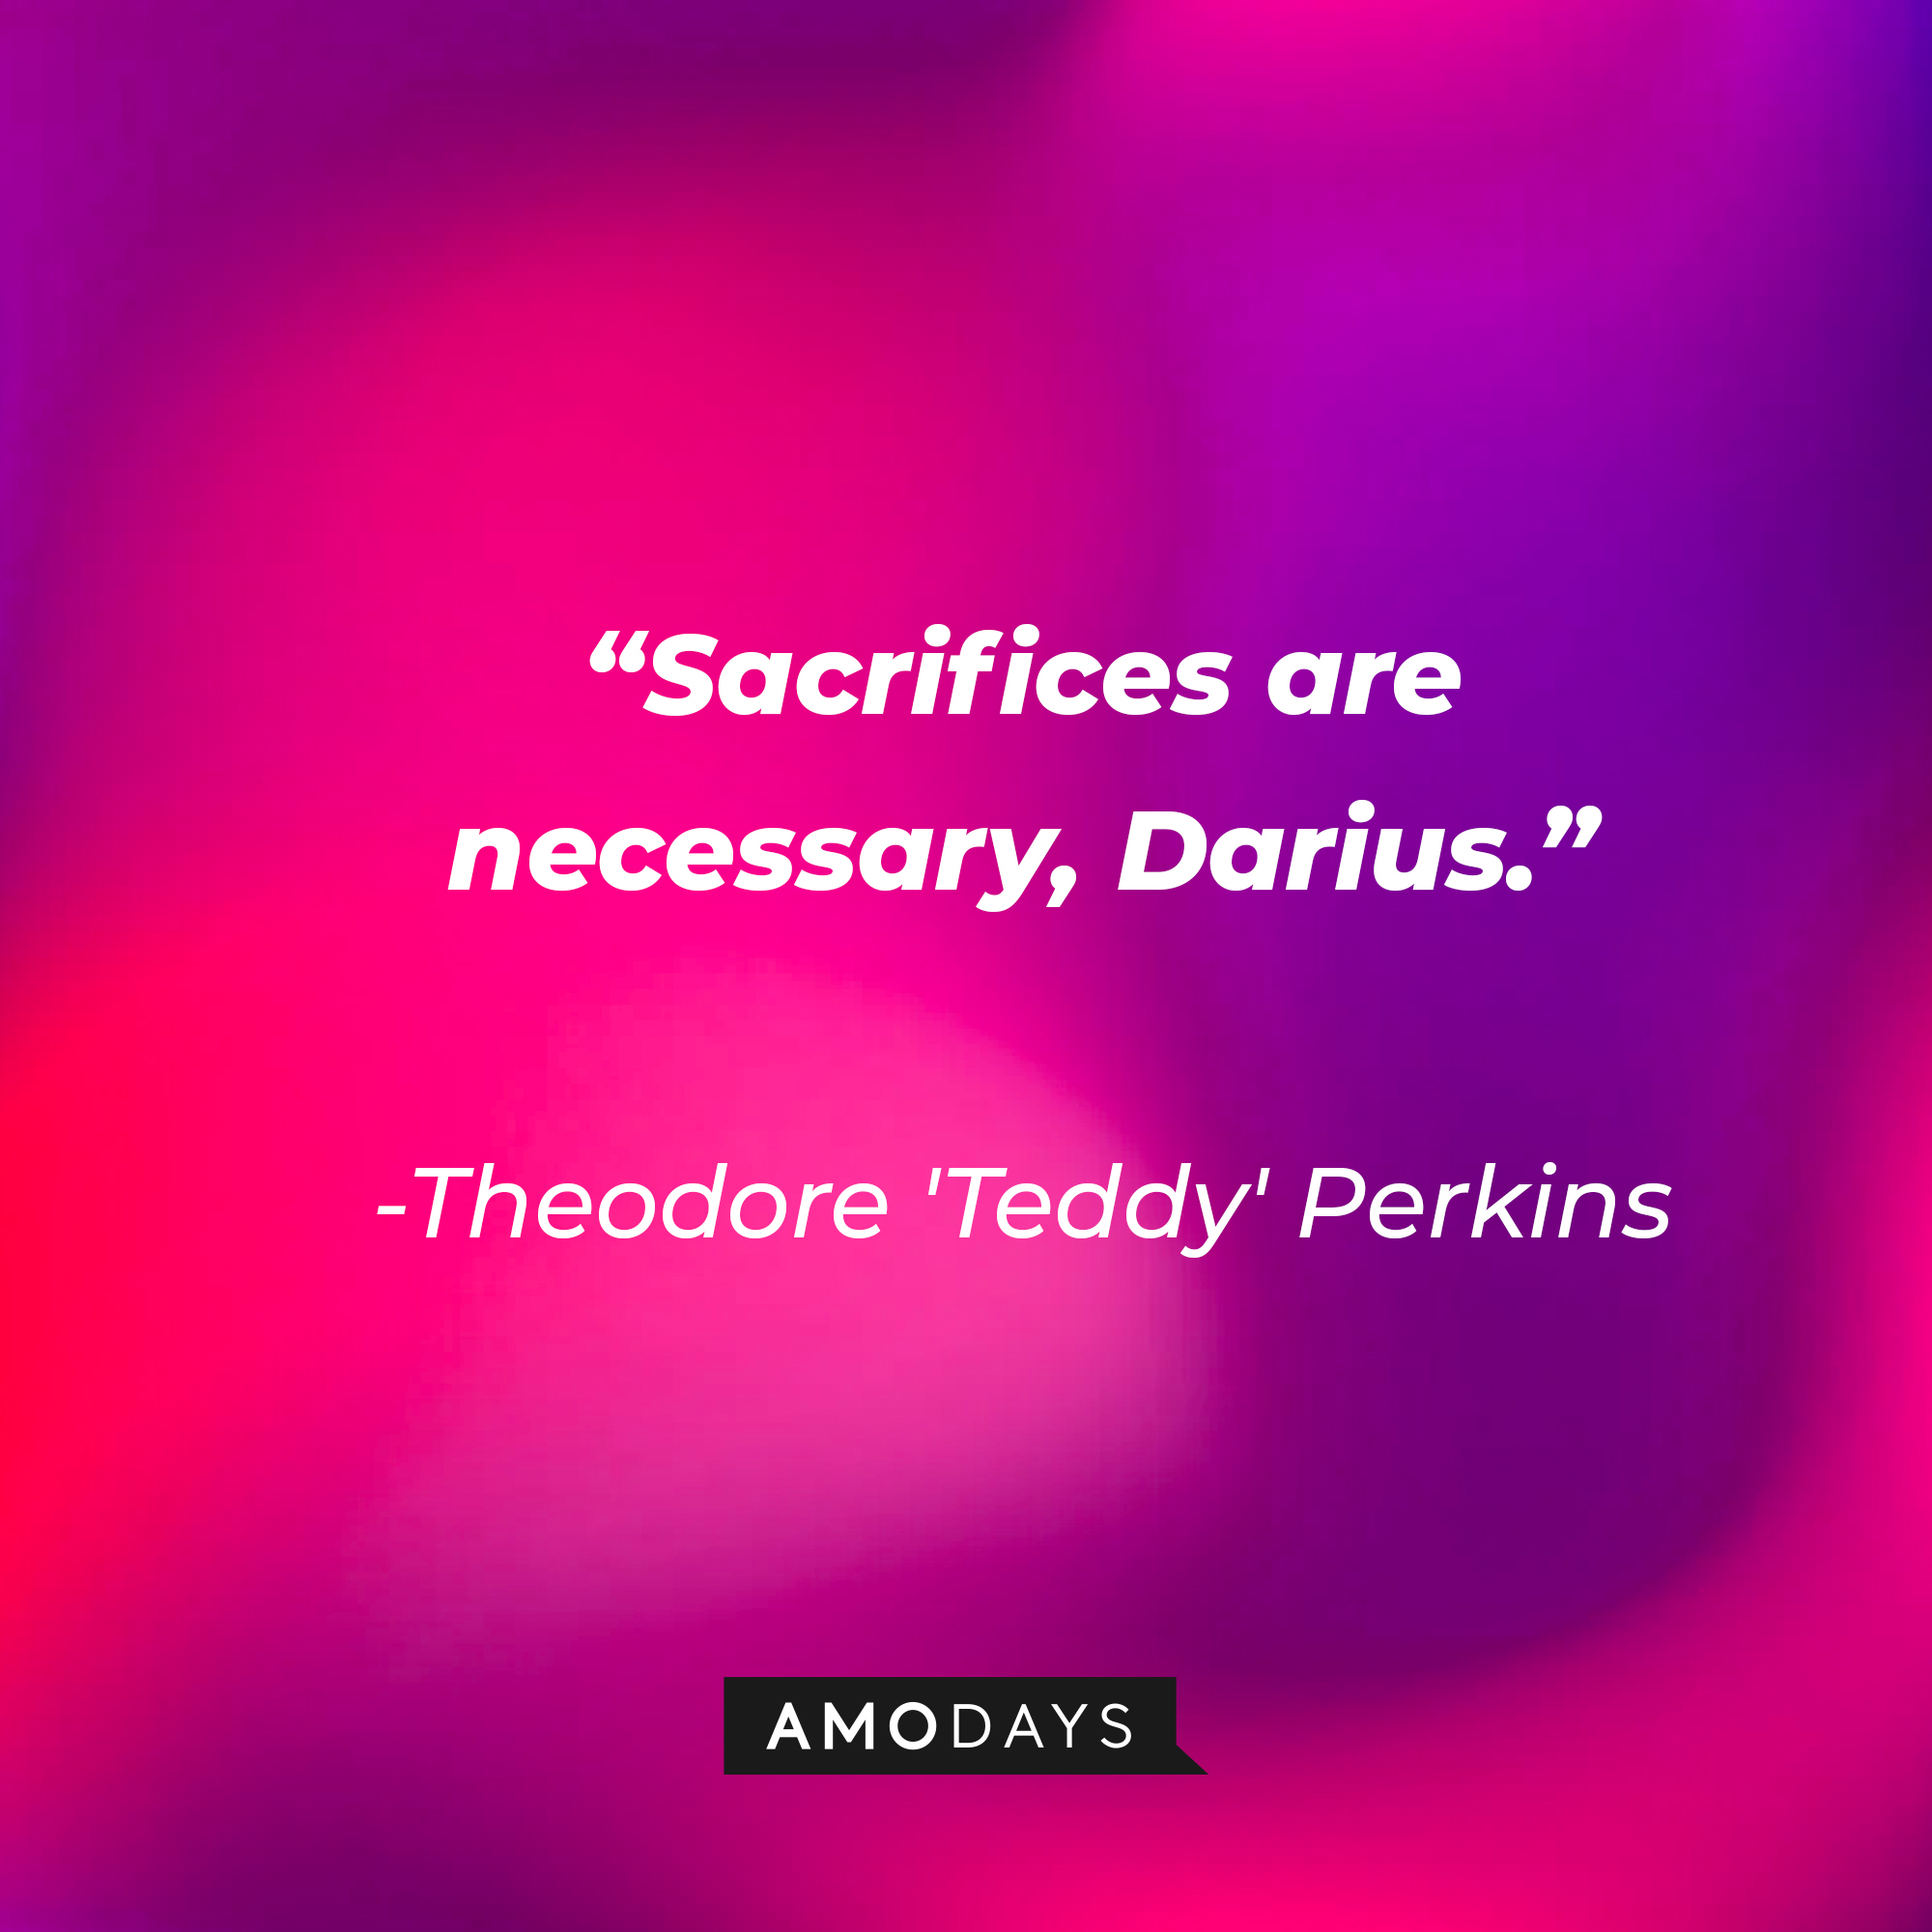 Theodore 'Teddy' Perkins’ quote: “Sacrifices are necessary, Darius.”  | Source: AmoDays